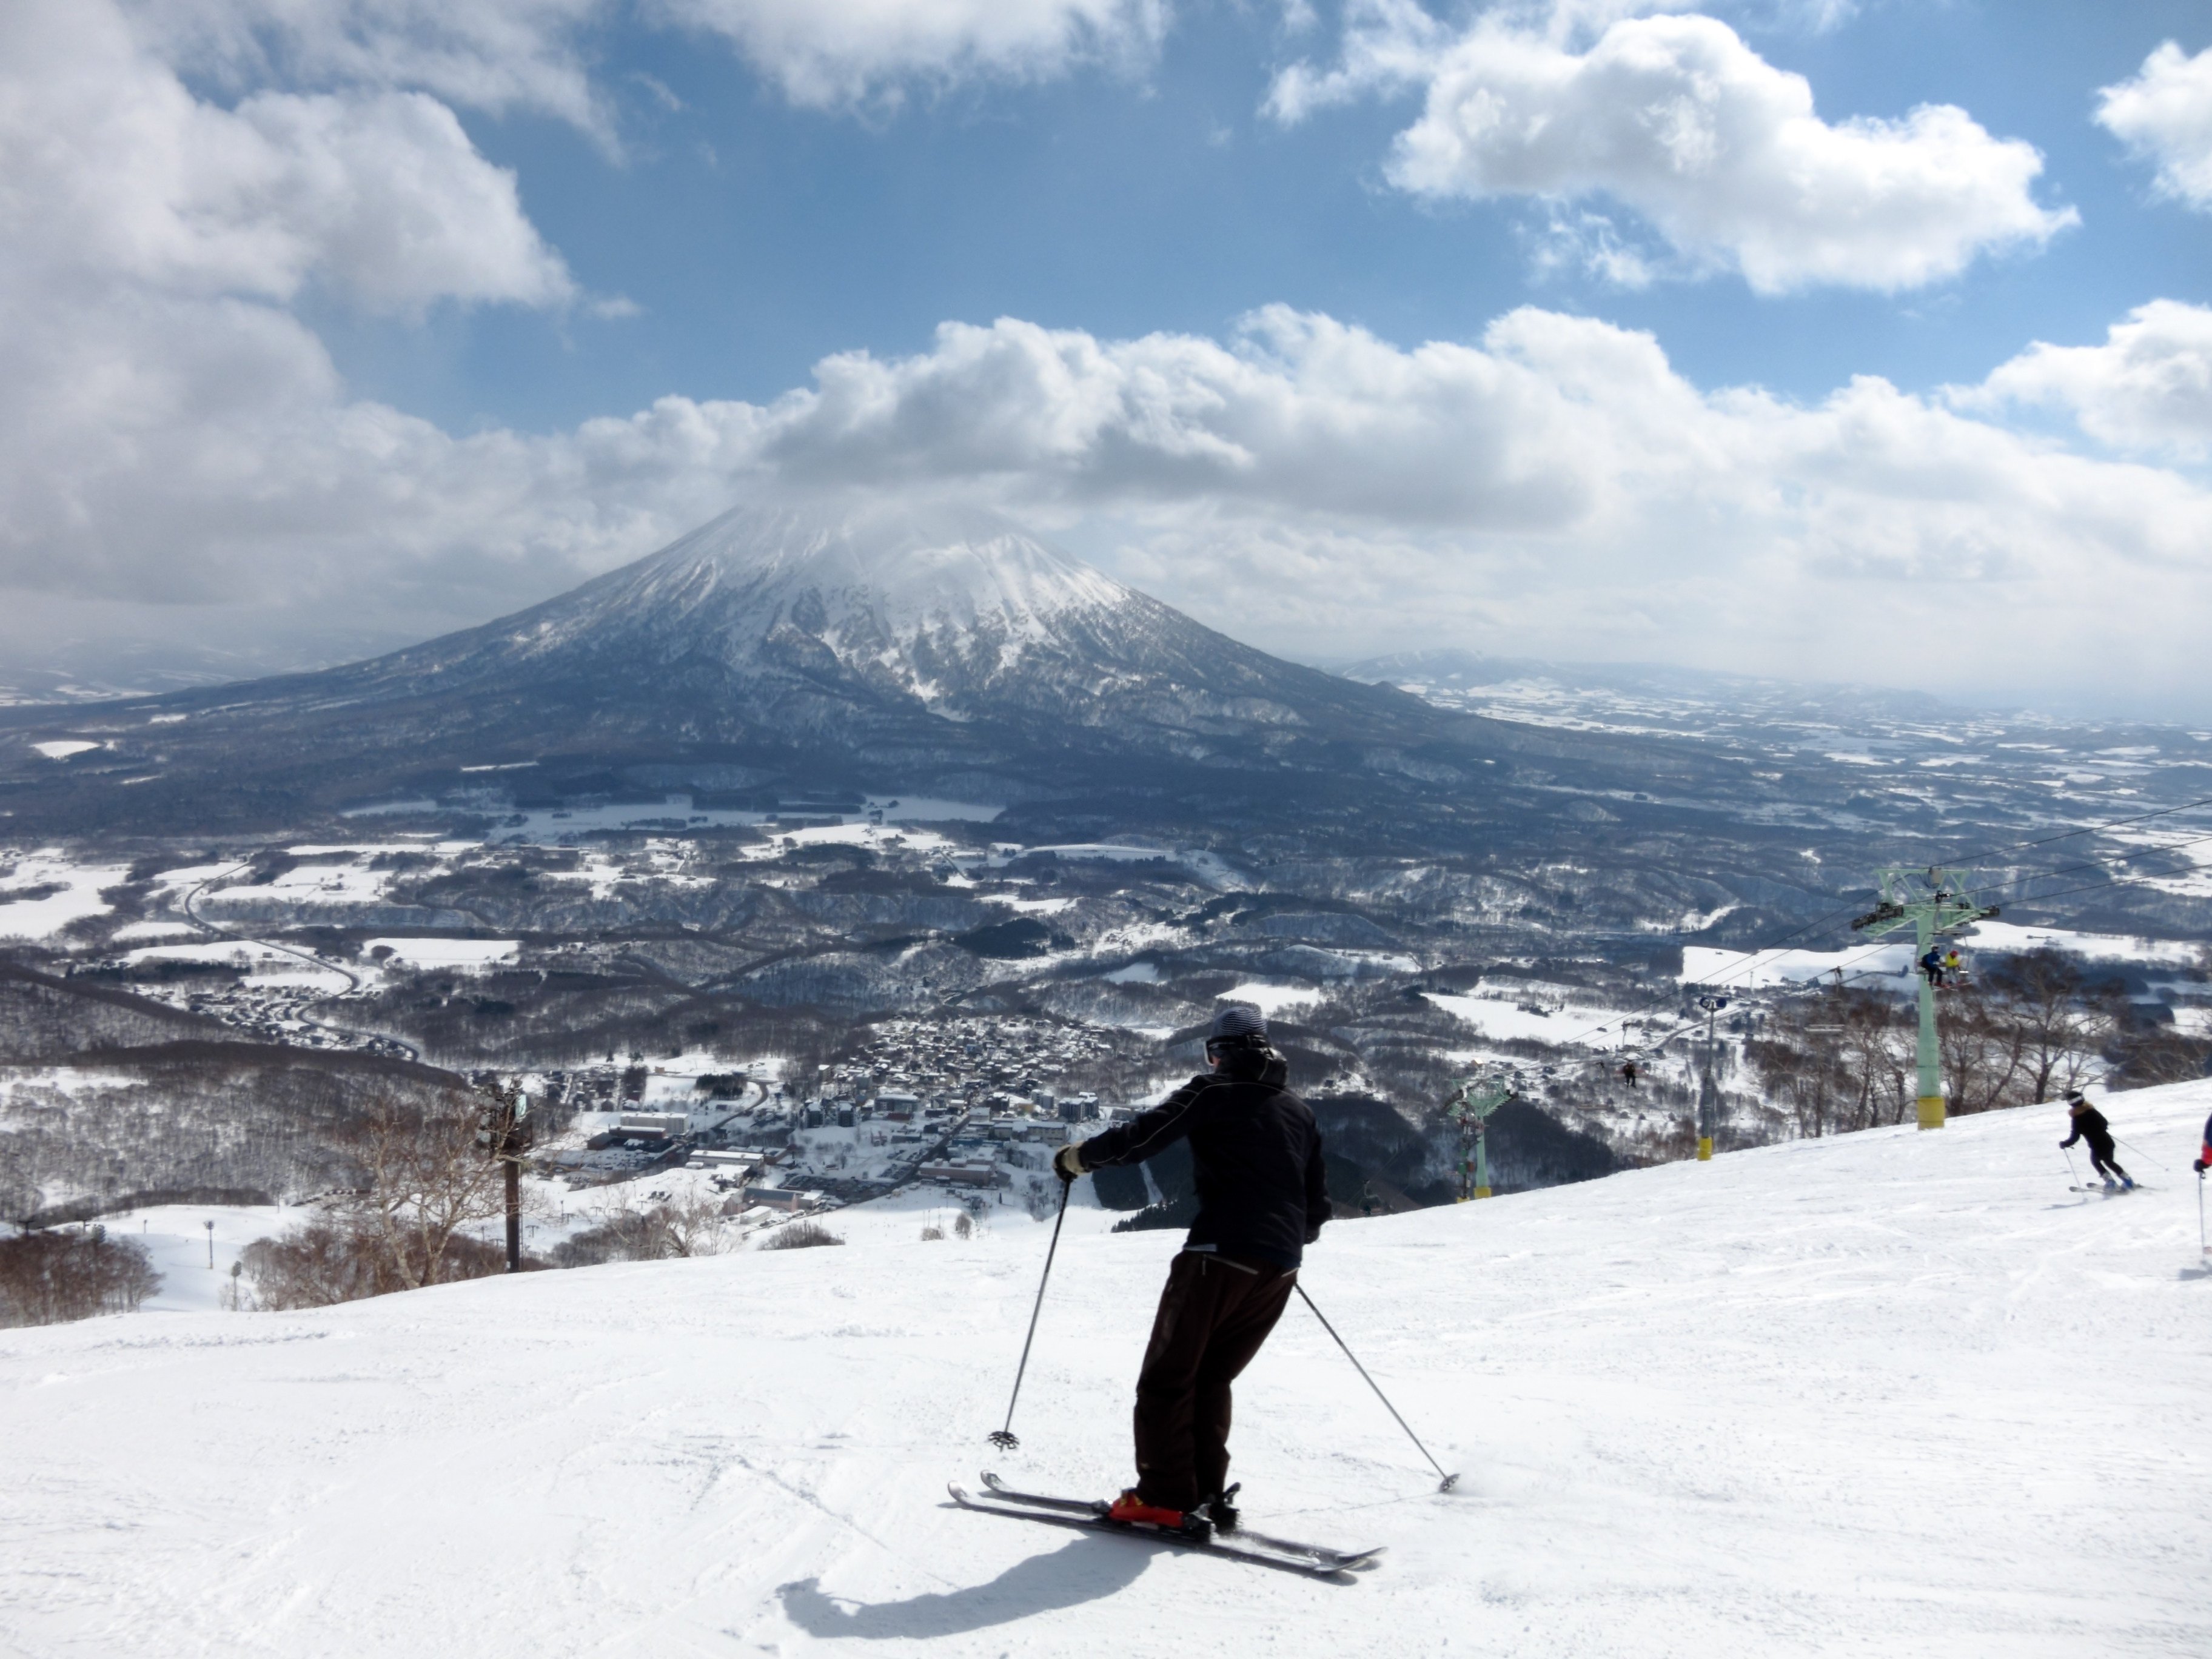 Skiing in Hokkaido with Mount Yotei in the background. Photo: Shutterstock